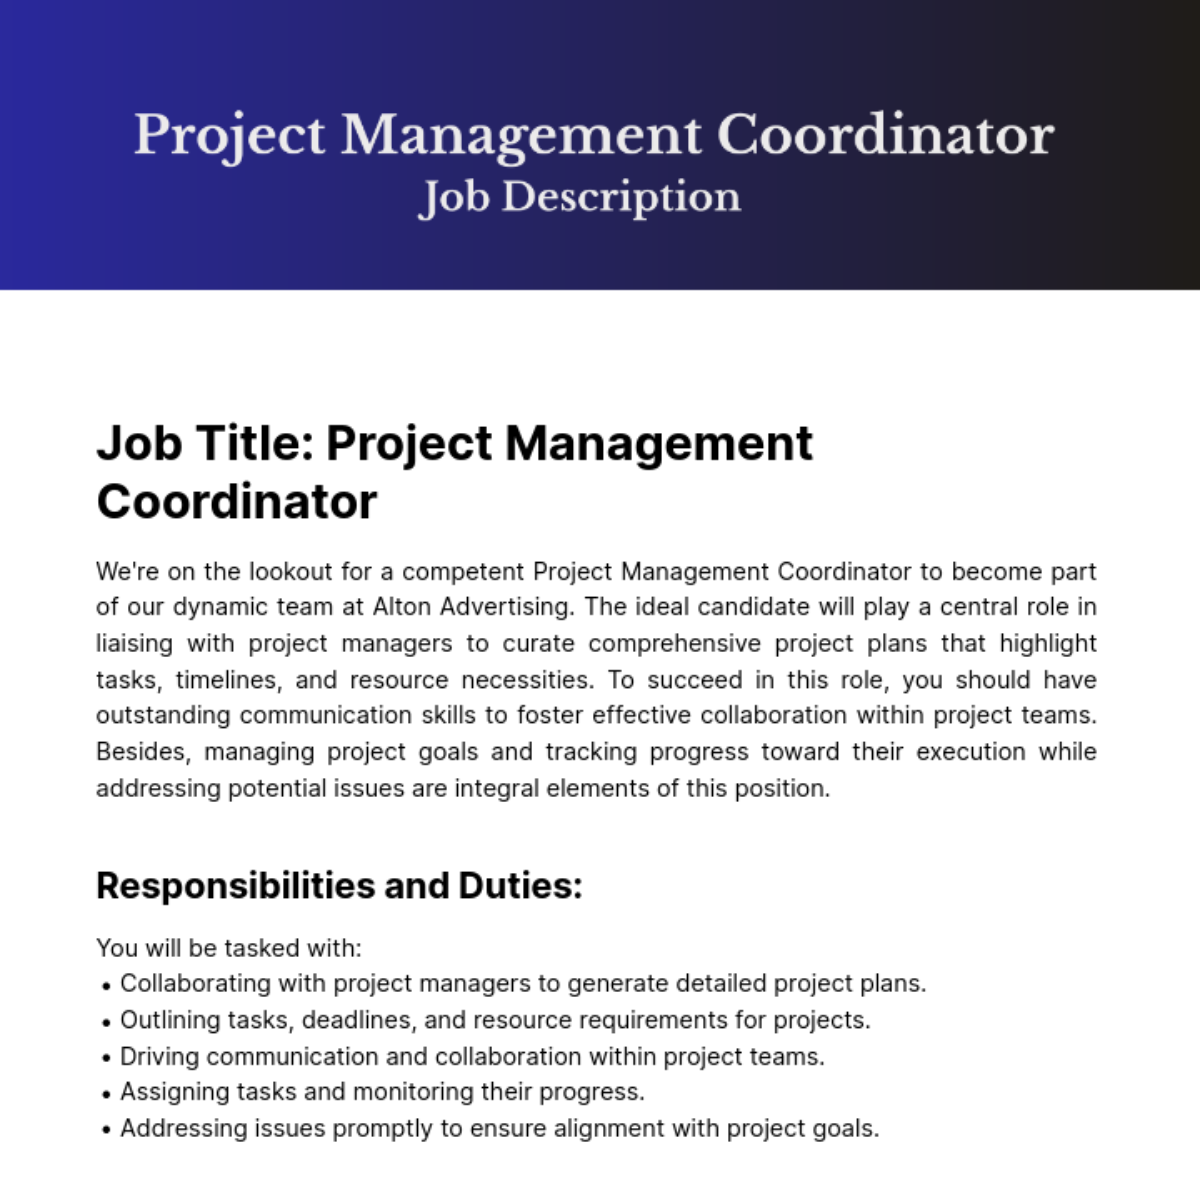 Project Management Coordinator Job Description Template